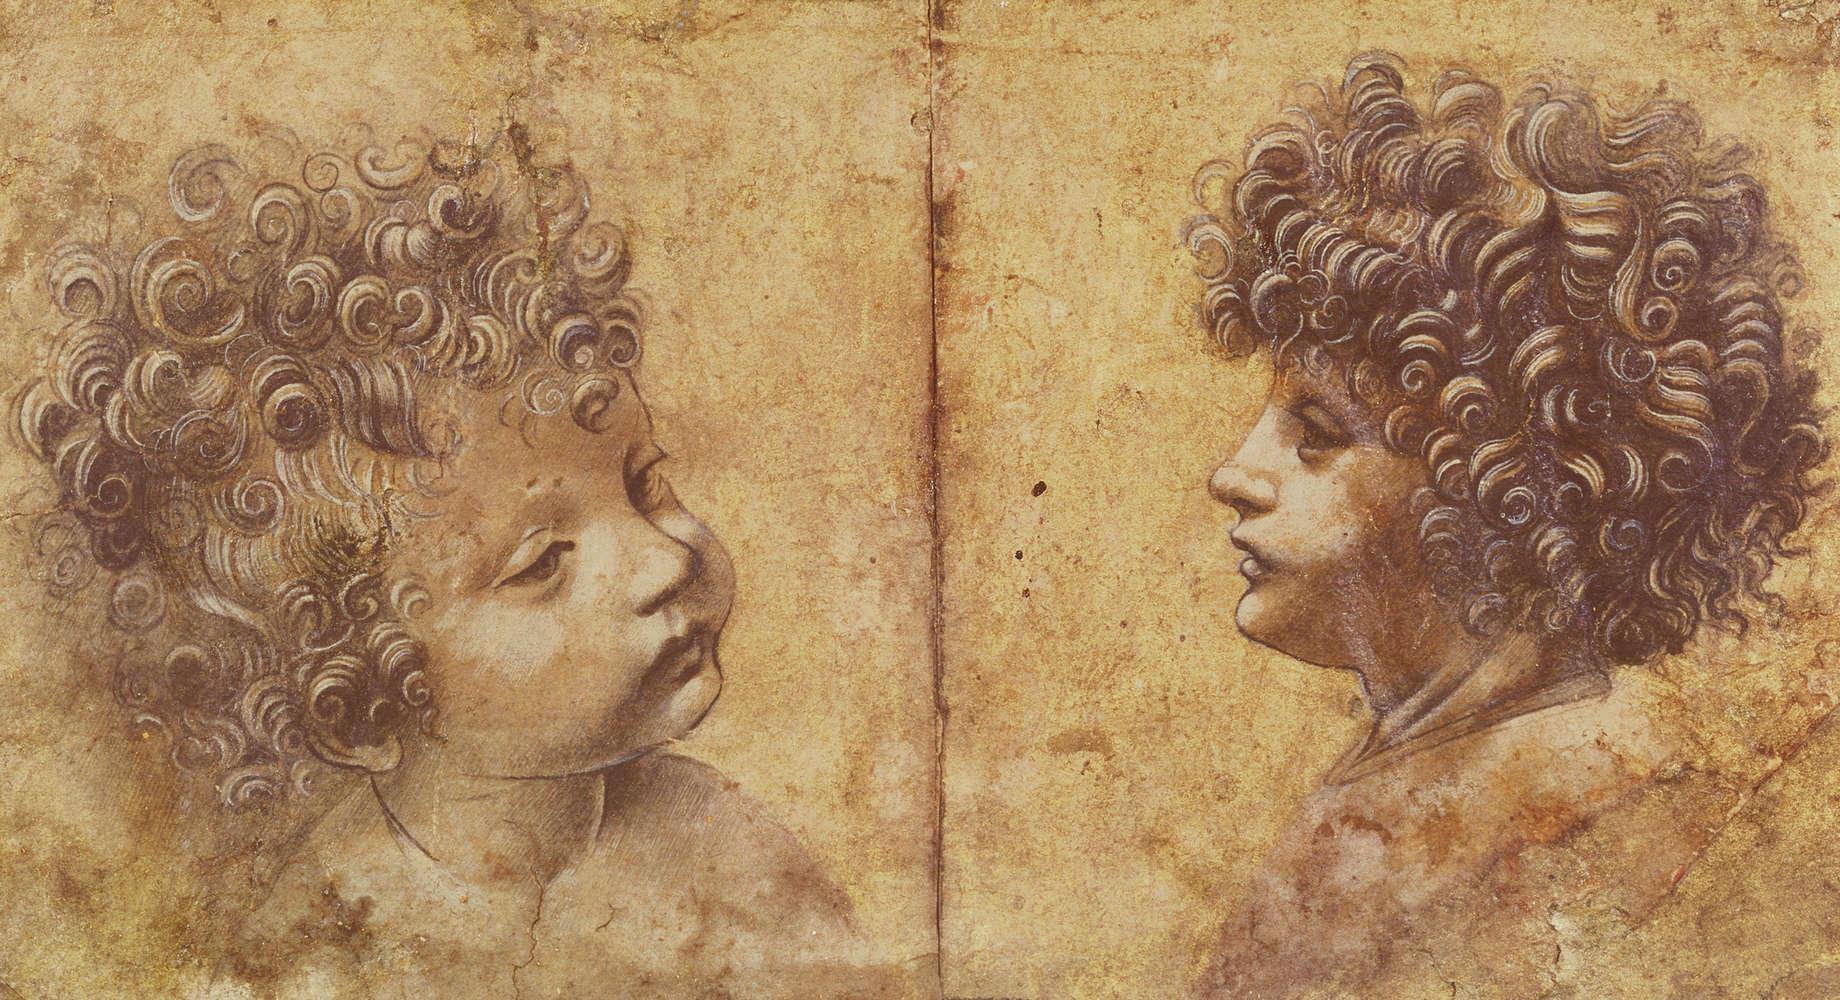             Studio di una testa di bambino" murale di Leonardo da Vinci
        